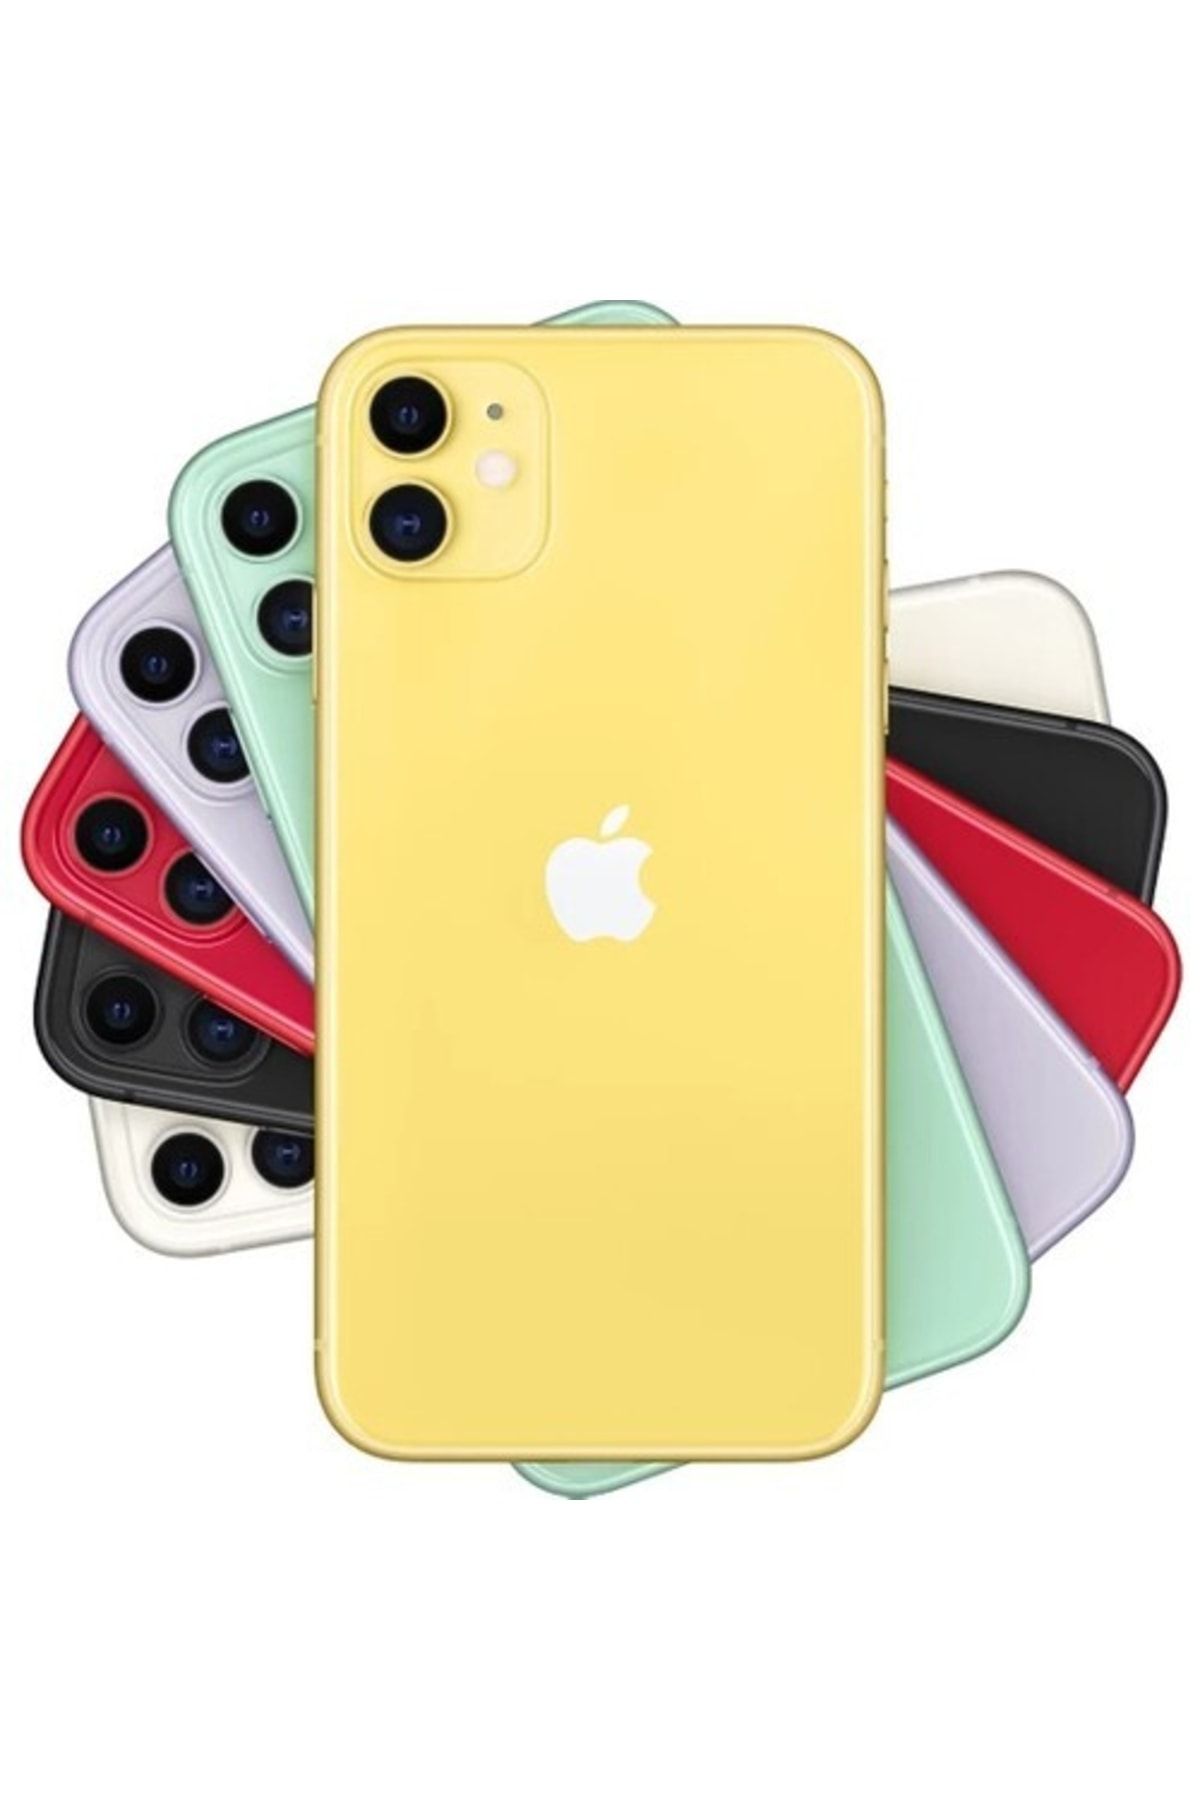 Apple Yenilenmiş iPhone 11 Yellow 64 GB